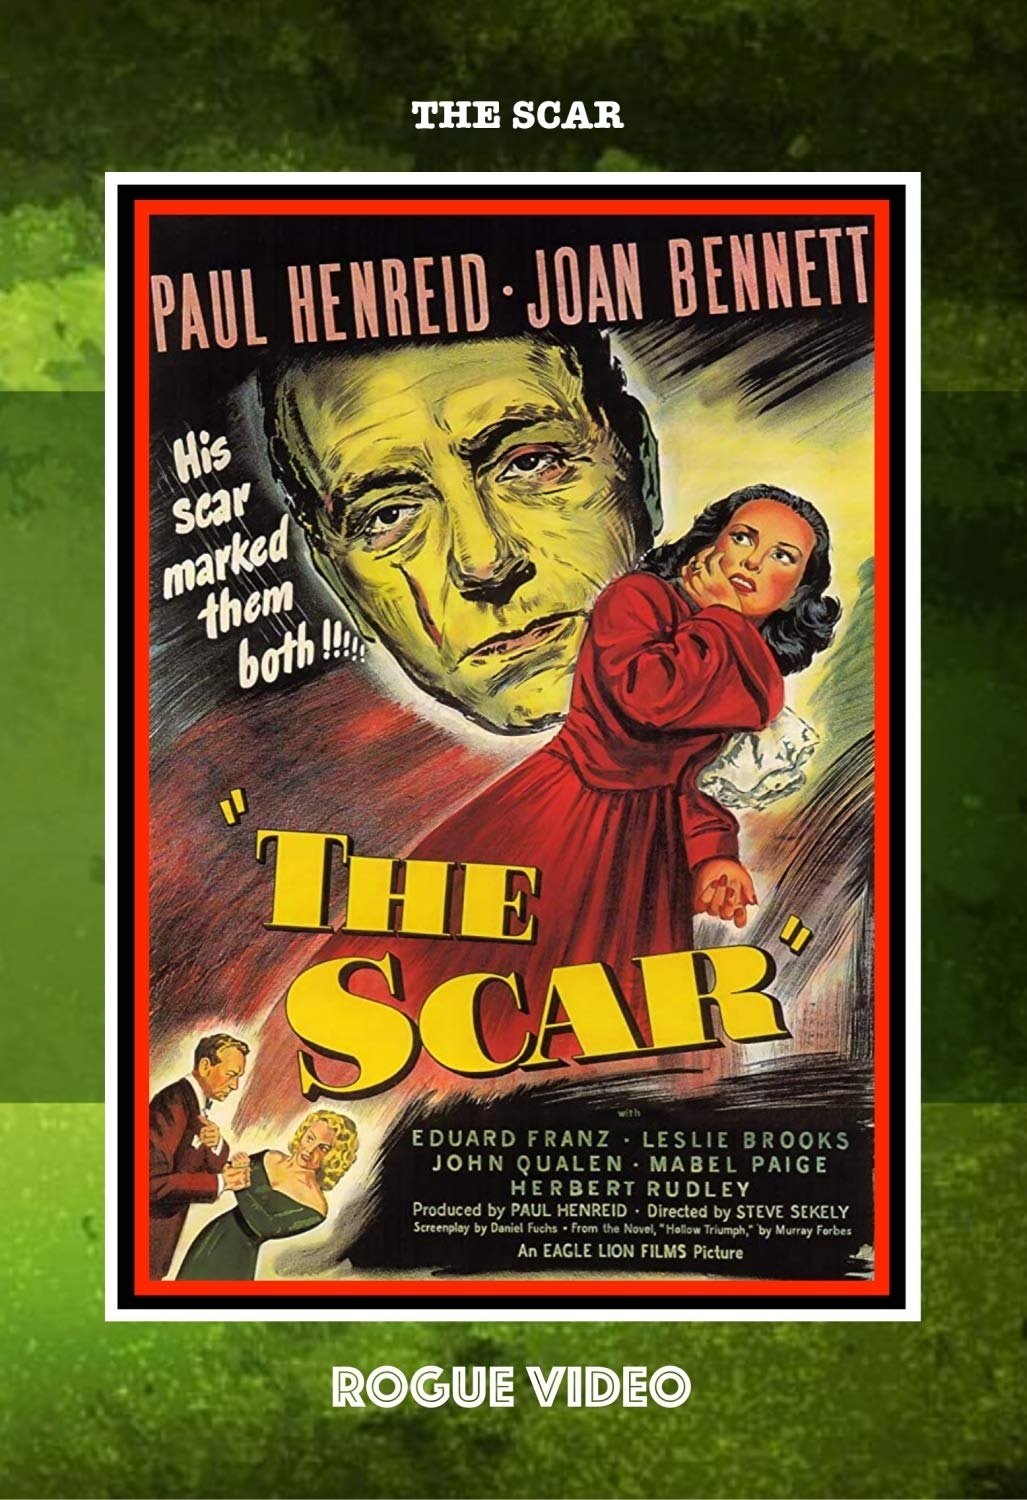 ROGUE VIDEO rare horror DVDs / cult films & fiction: "THE SCAR"